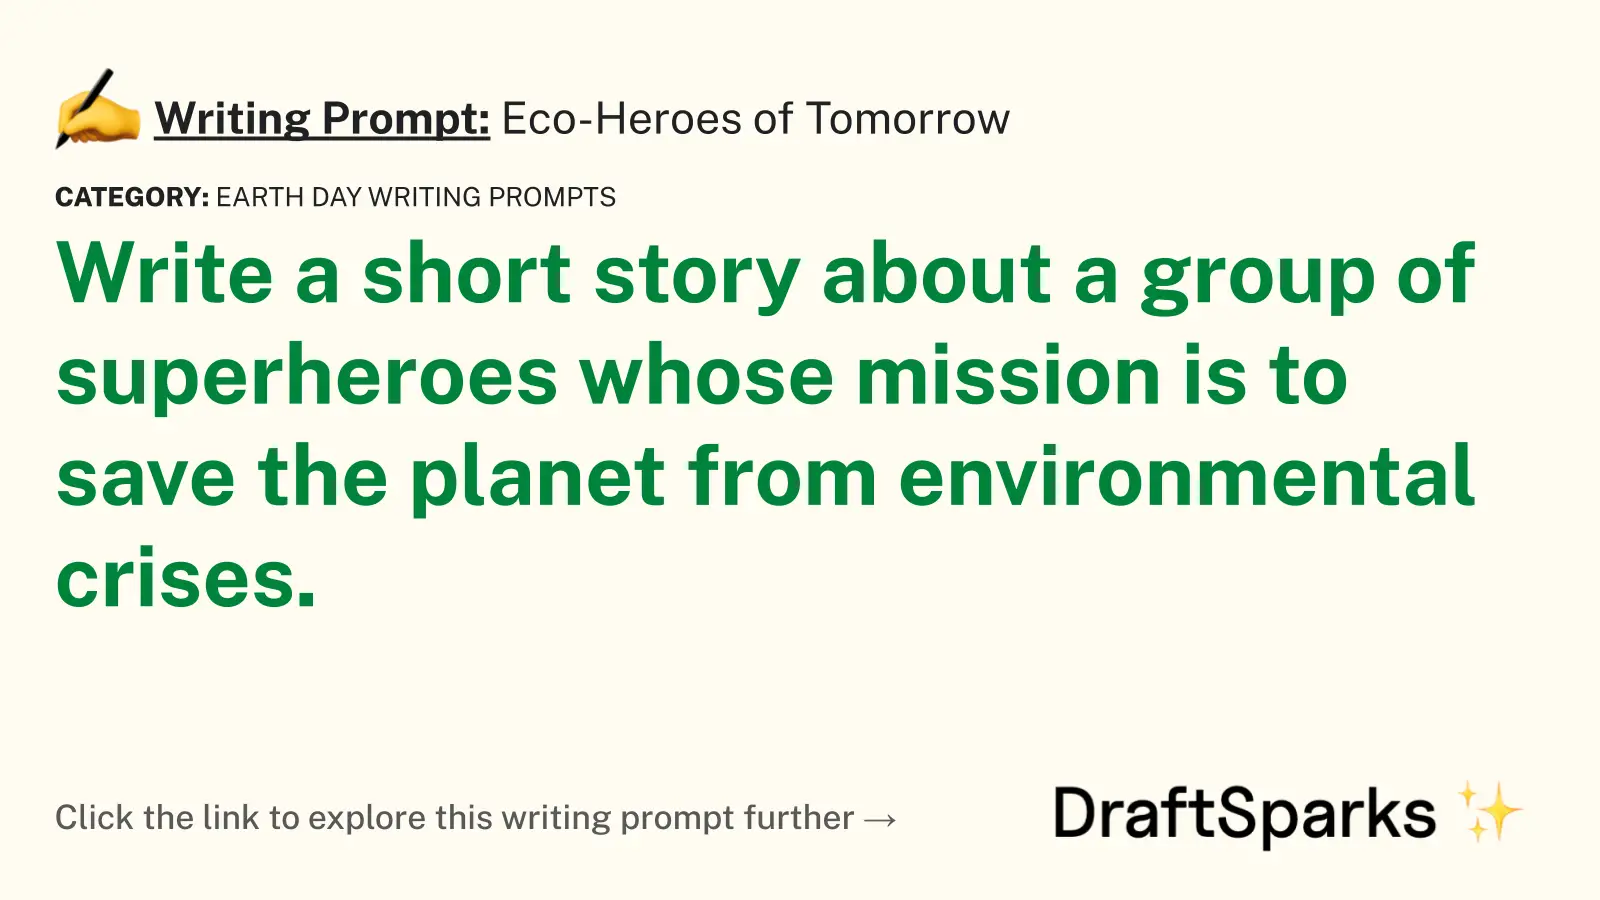 Eco-Heroes of Tomorrow